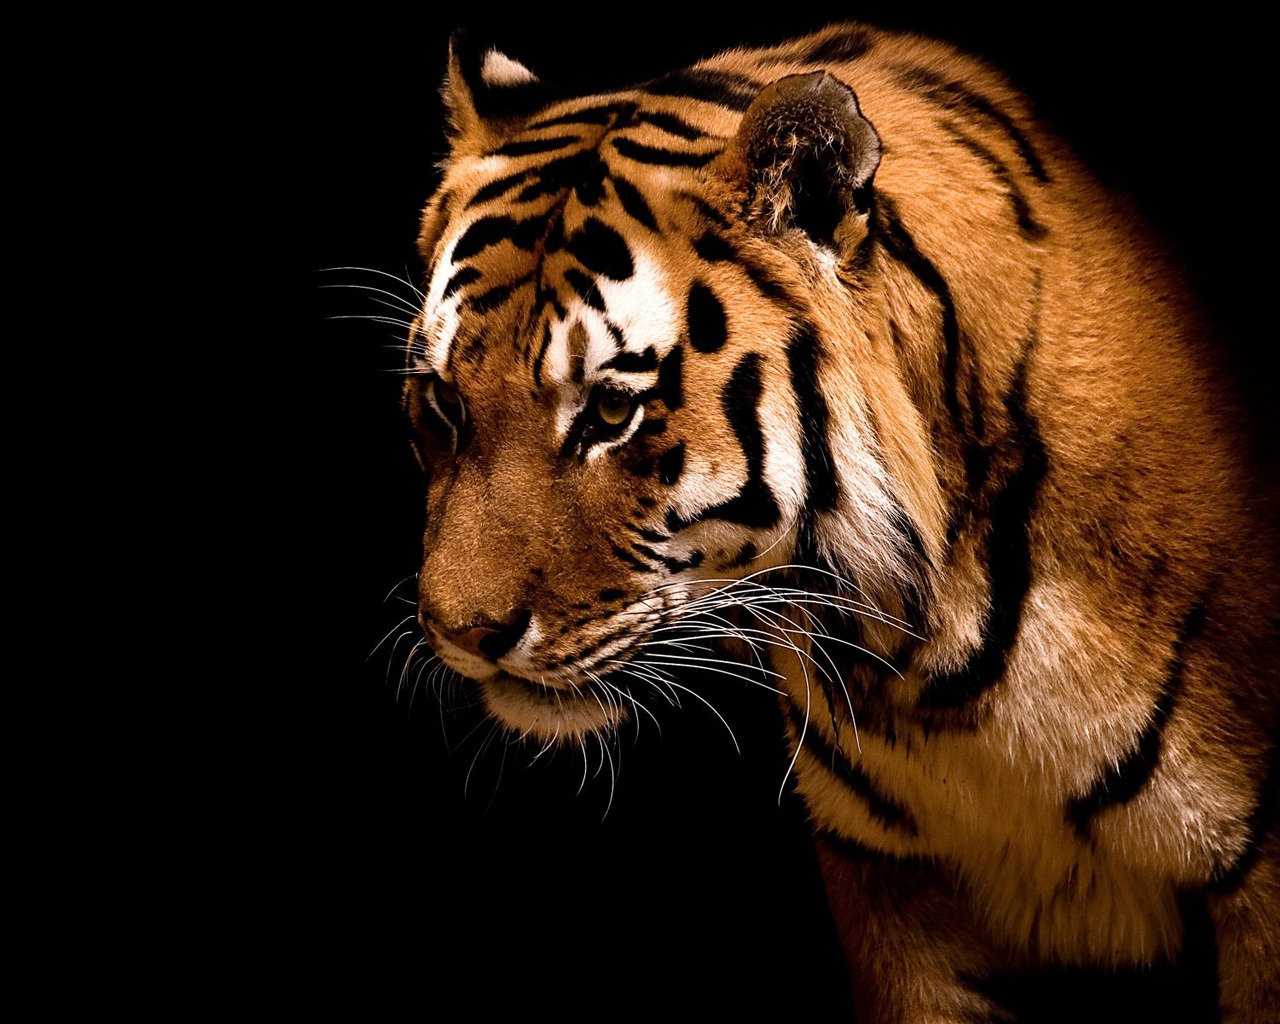 Impressive Tiger for 1280 x 1024 resolution